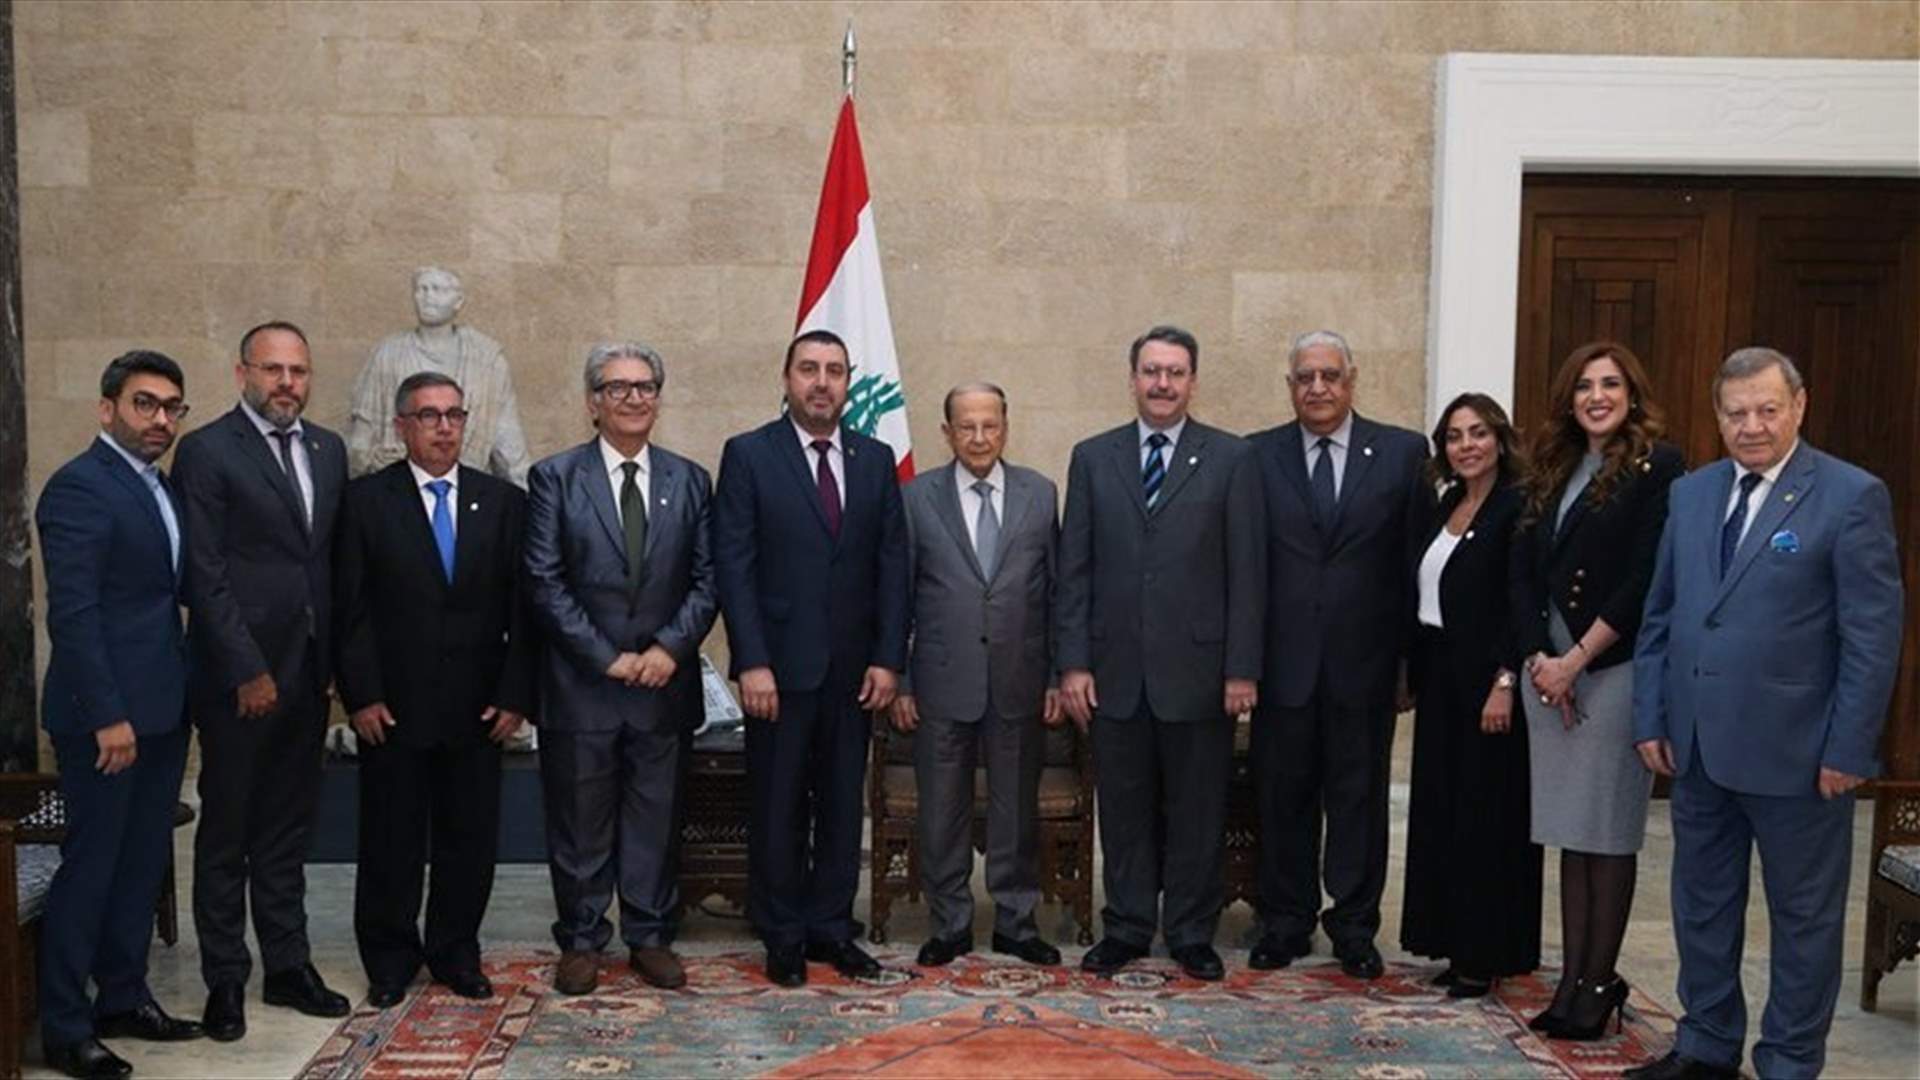 President Aoun says measures taken are necessary to end the crisis